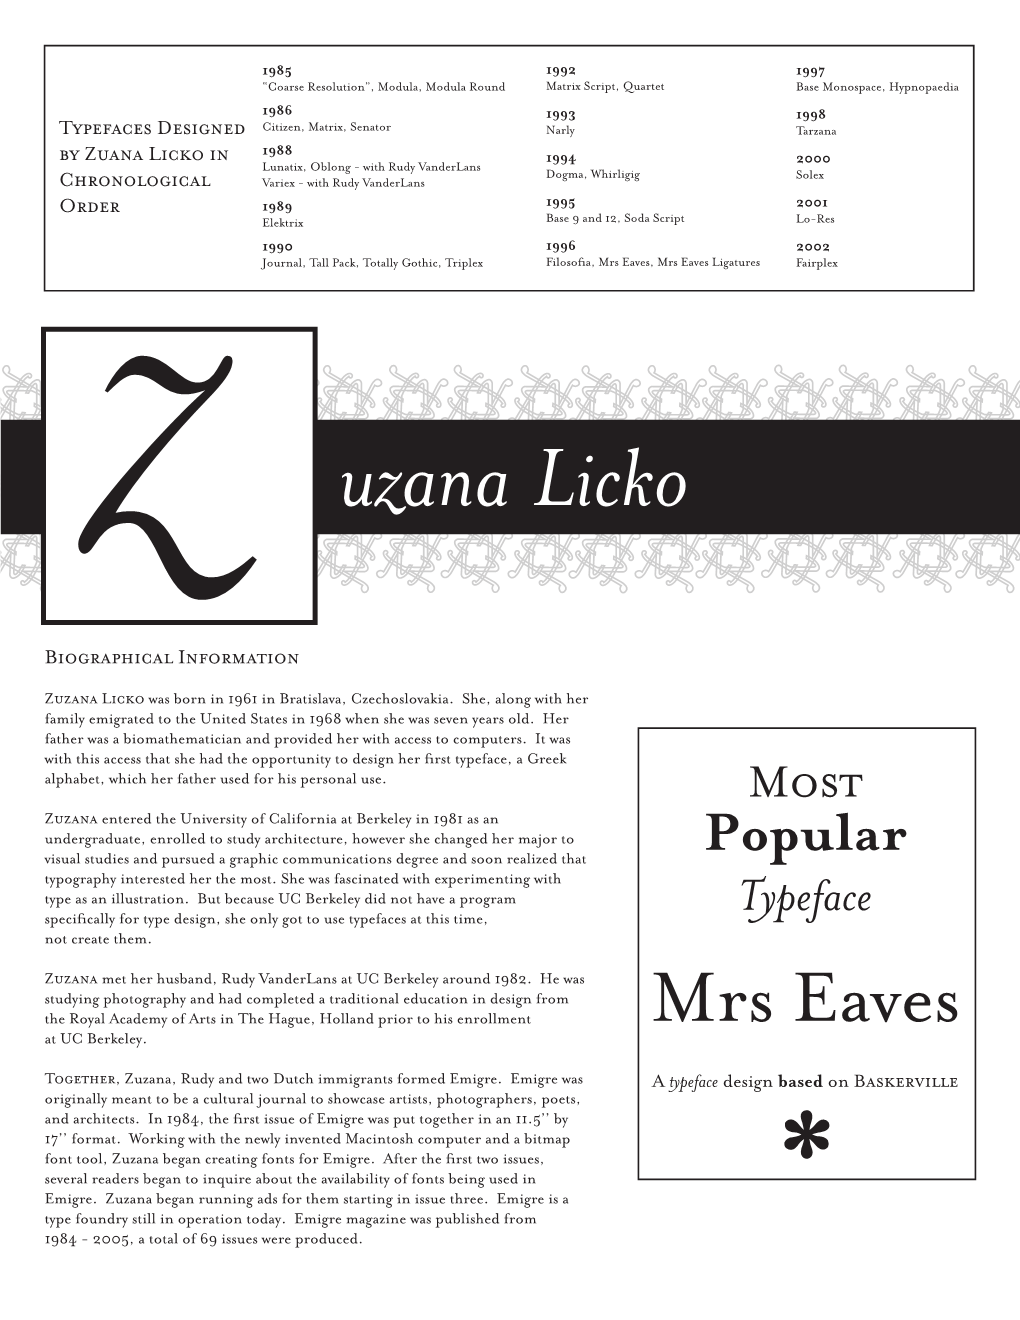 Uzana Licko Biographical Information